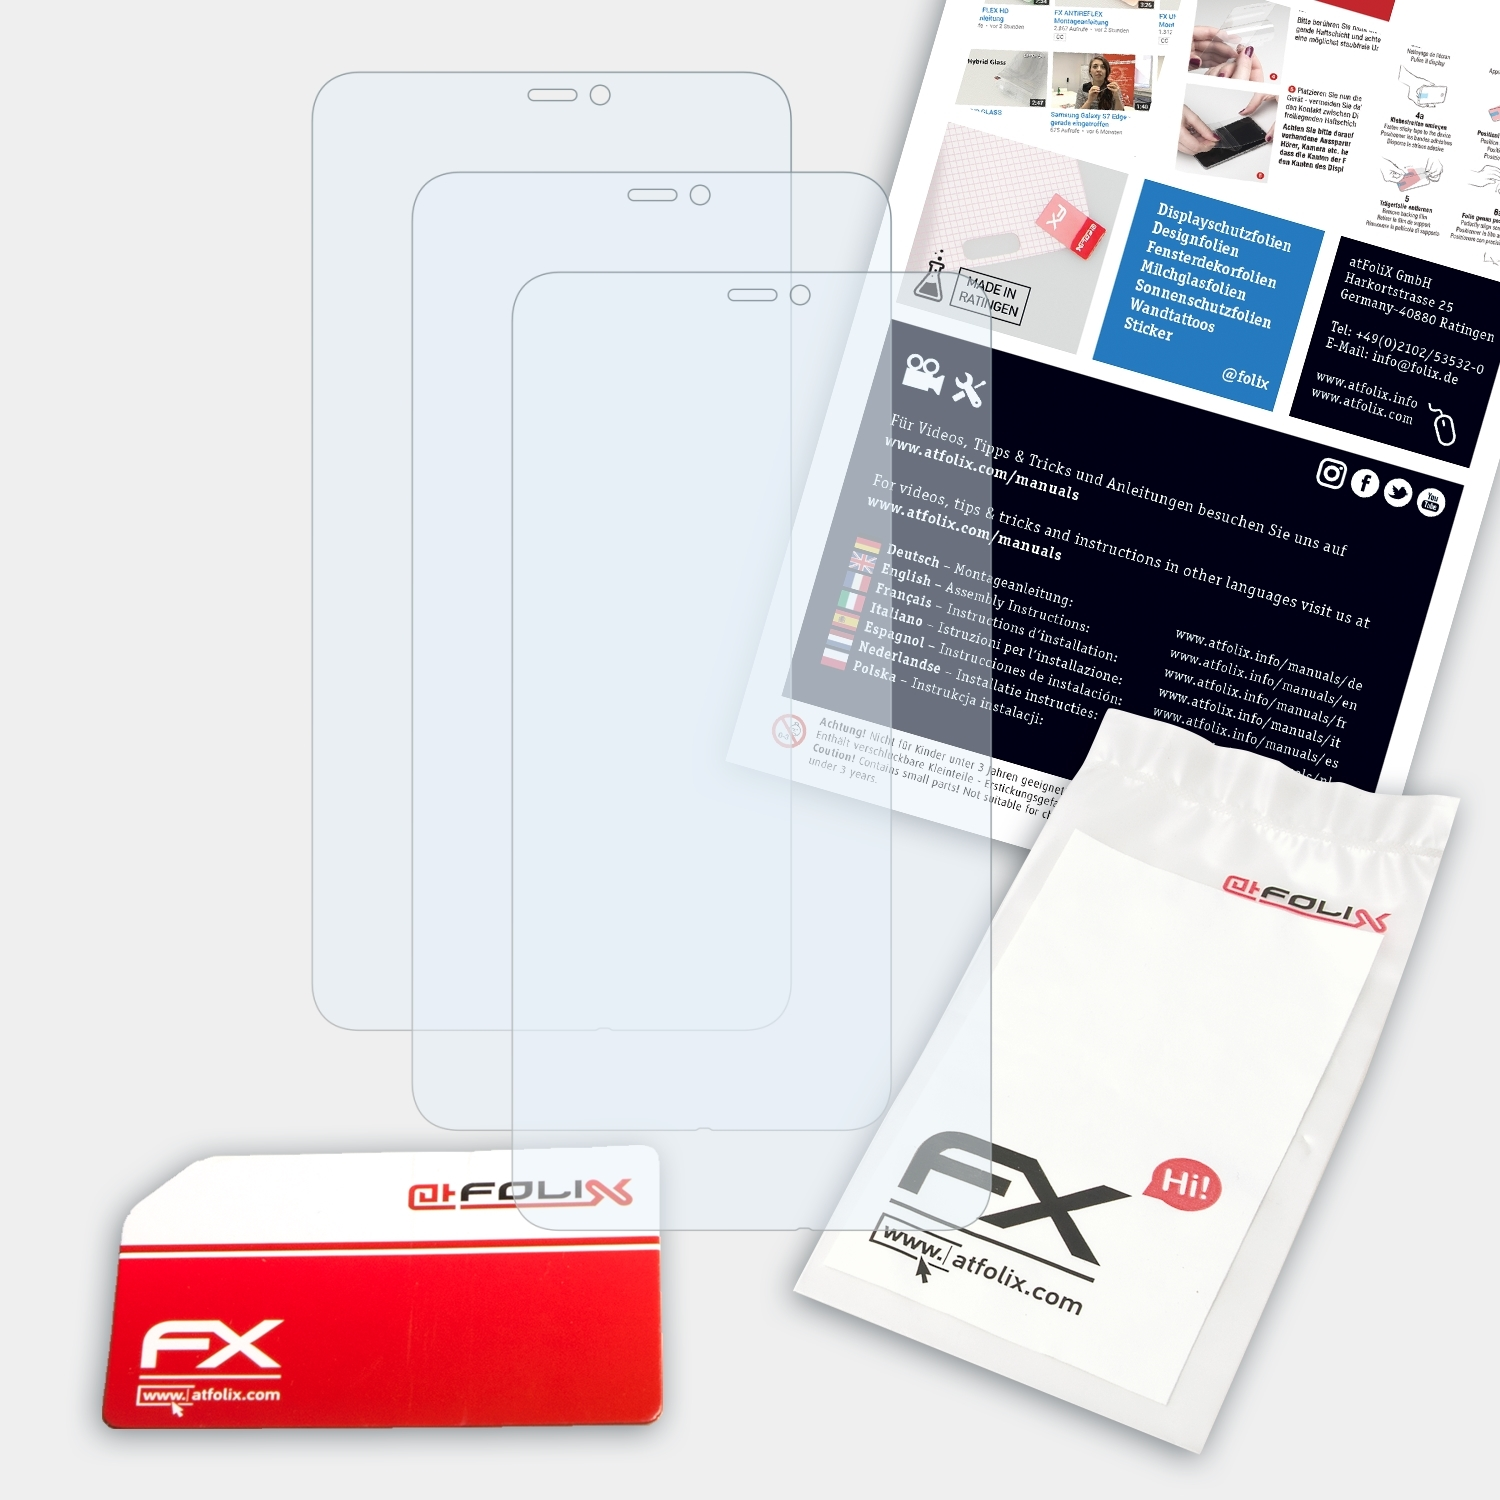 ATFOLIX 3x FX-Clear Lumia 640 Displayschutz(für Microsoft XL)